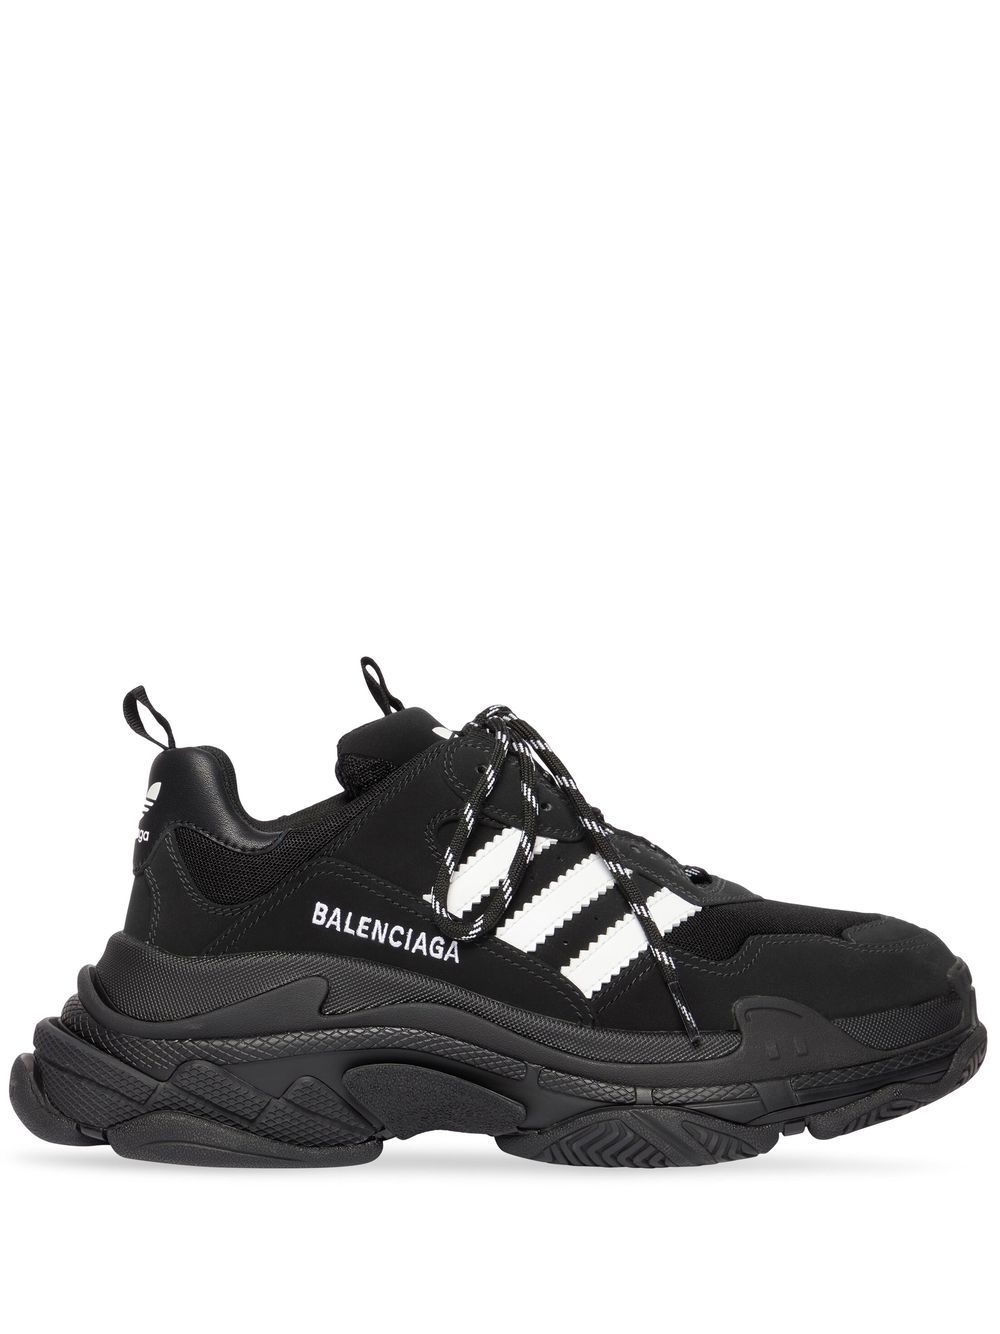 Balenciaga x adidas Triple S sneakers - Black